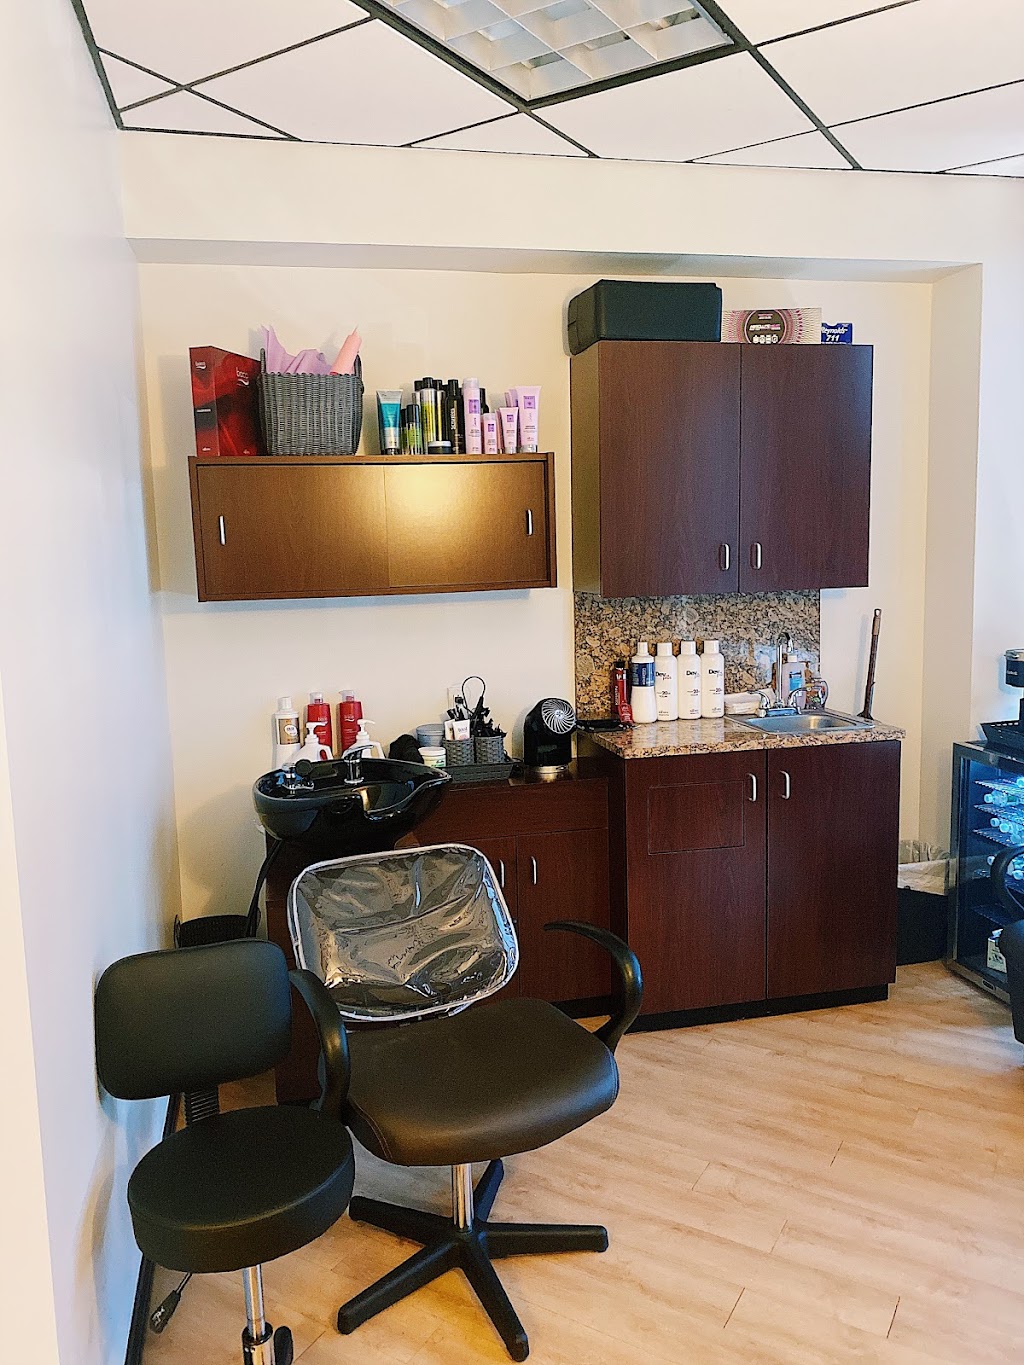 Joeys Hair Salon Suite | 388 Tarrytown Rd, White Plains, NY 10607 | Phone: (914) 316-6068